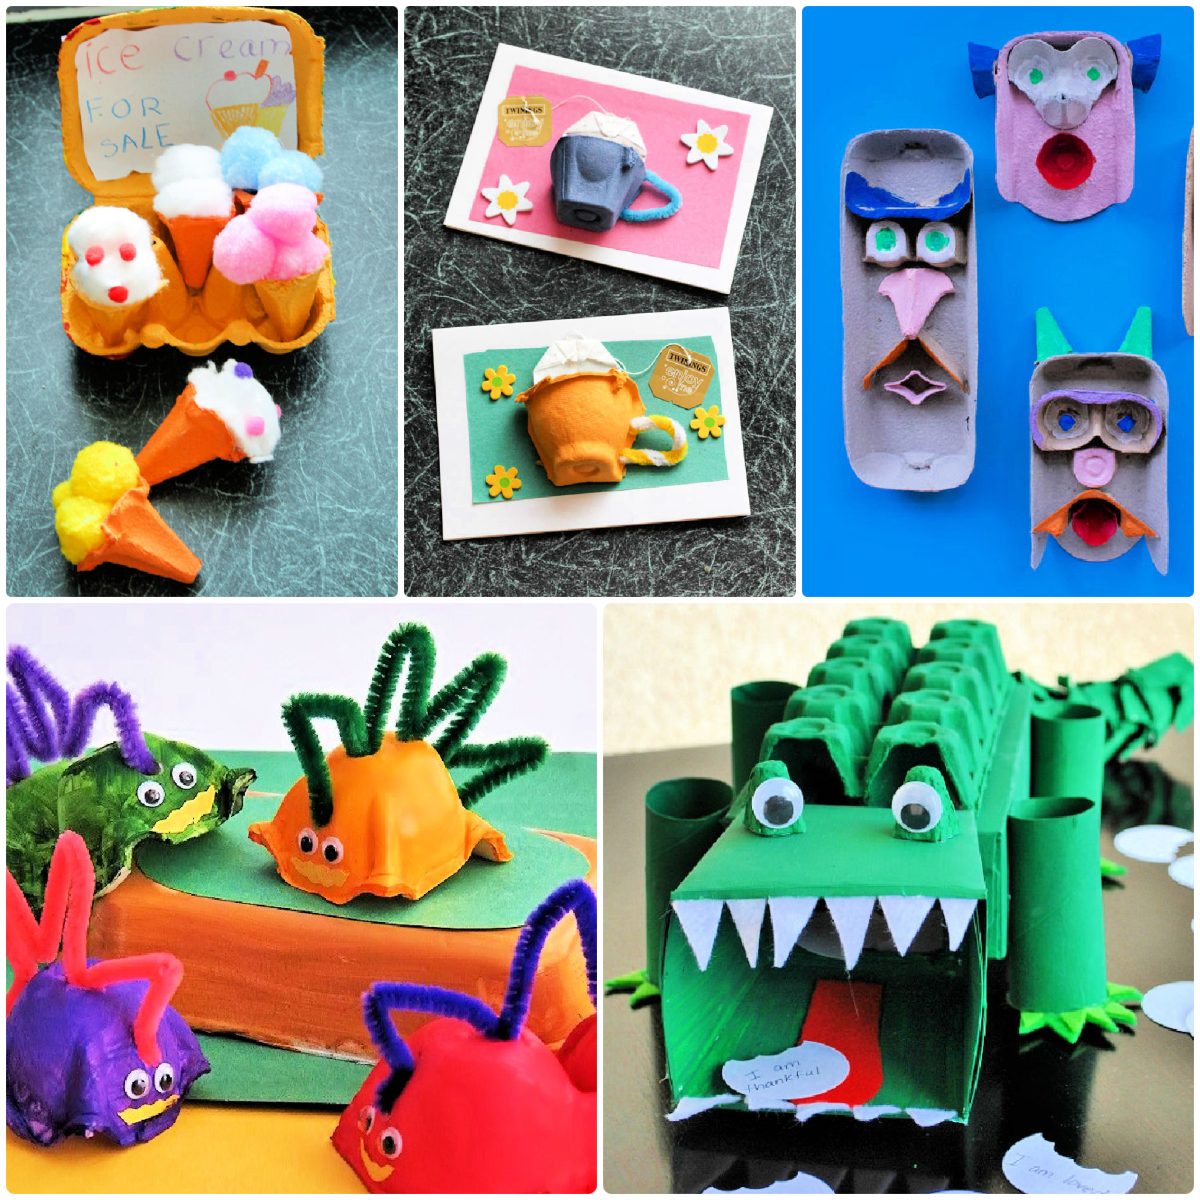 plastic egg carton crafts